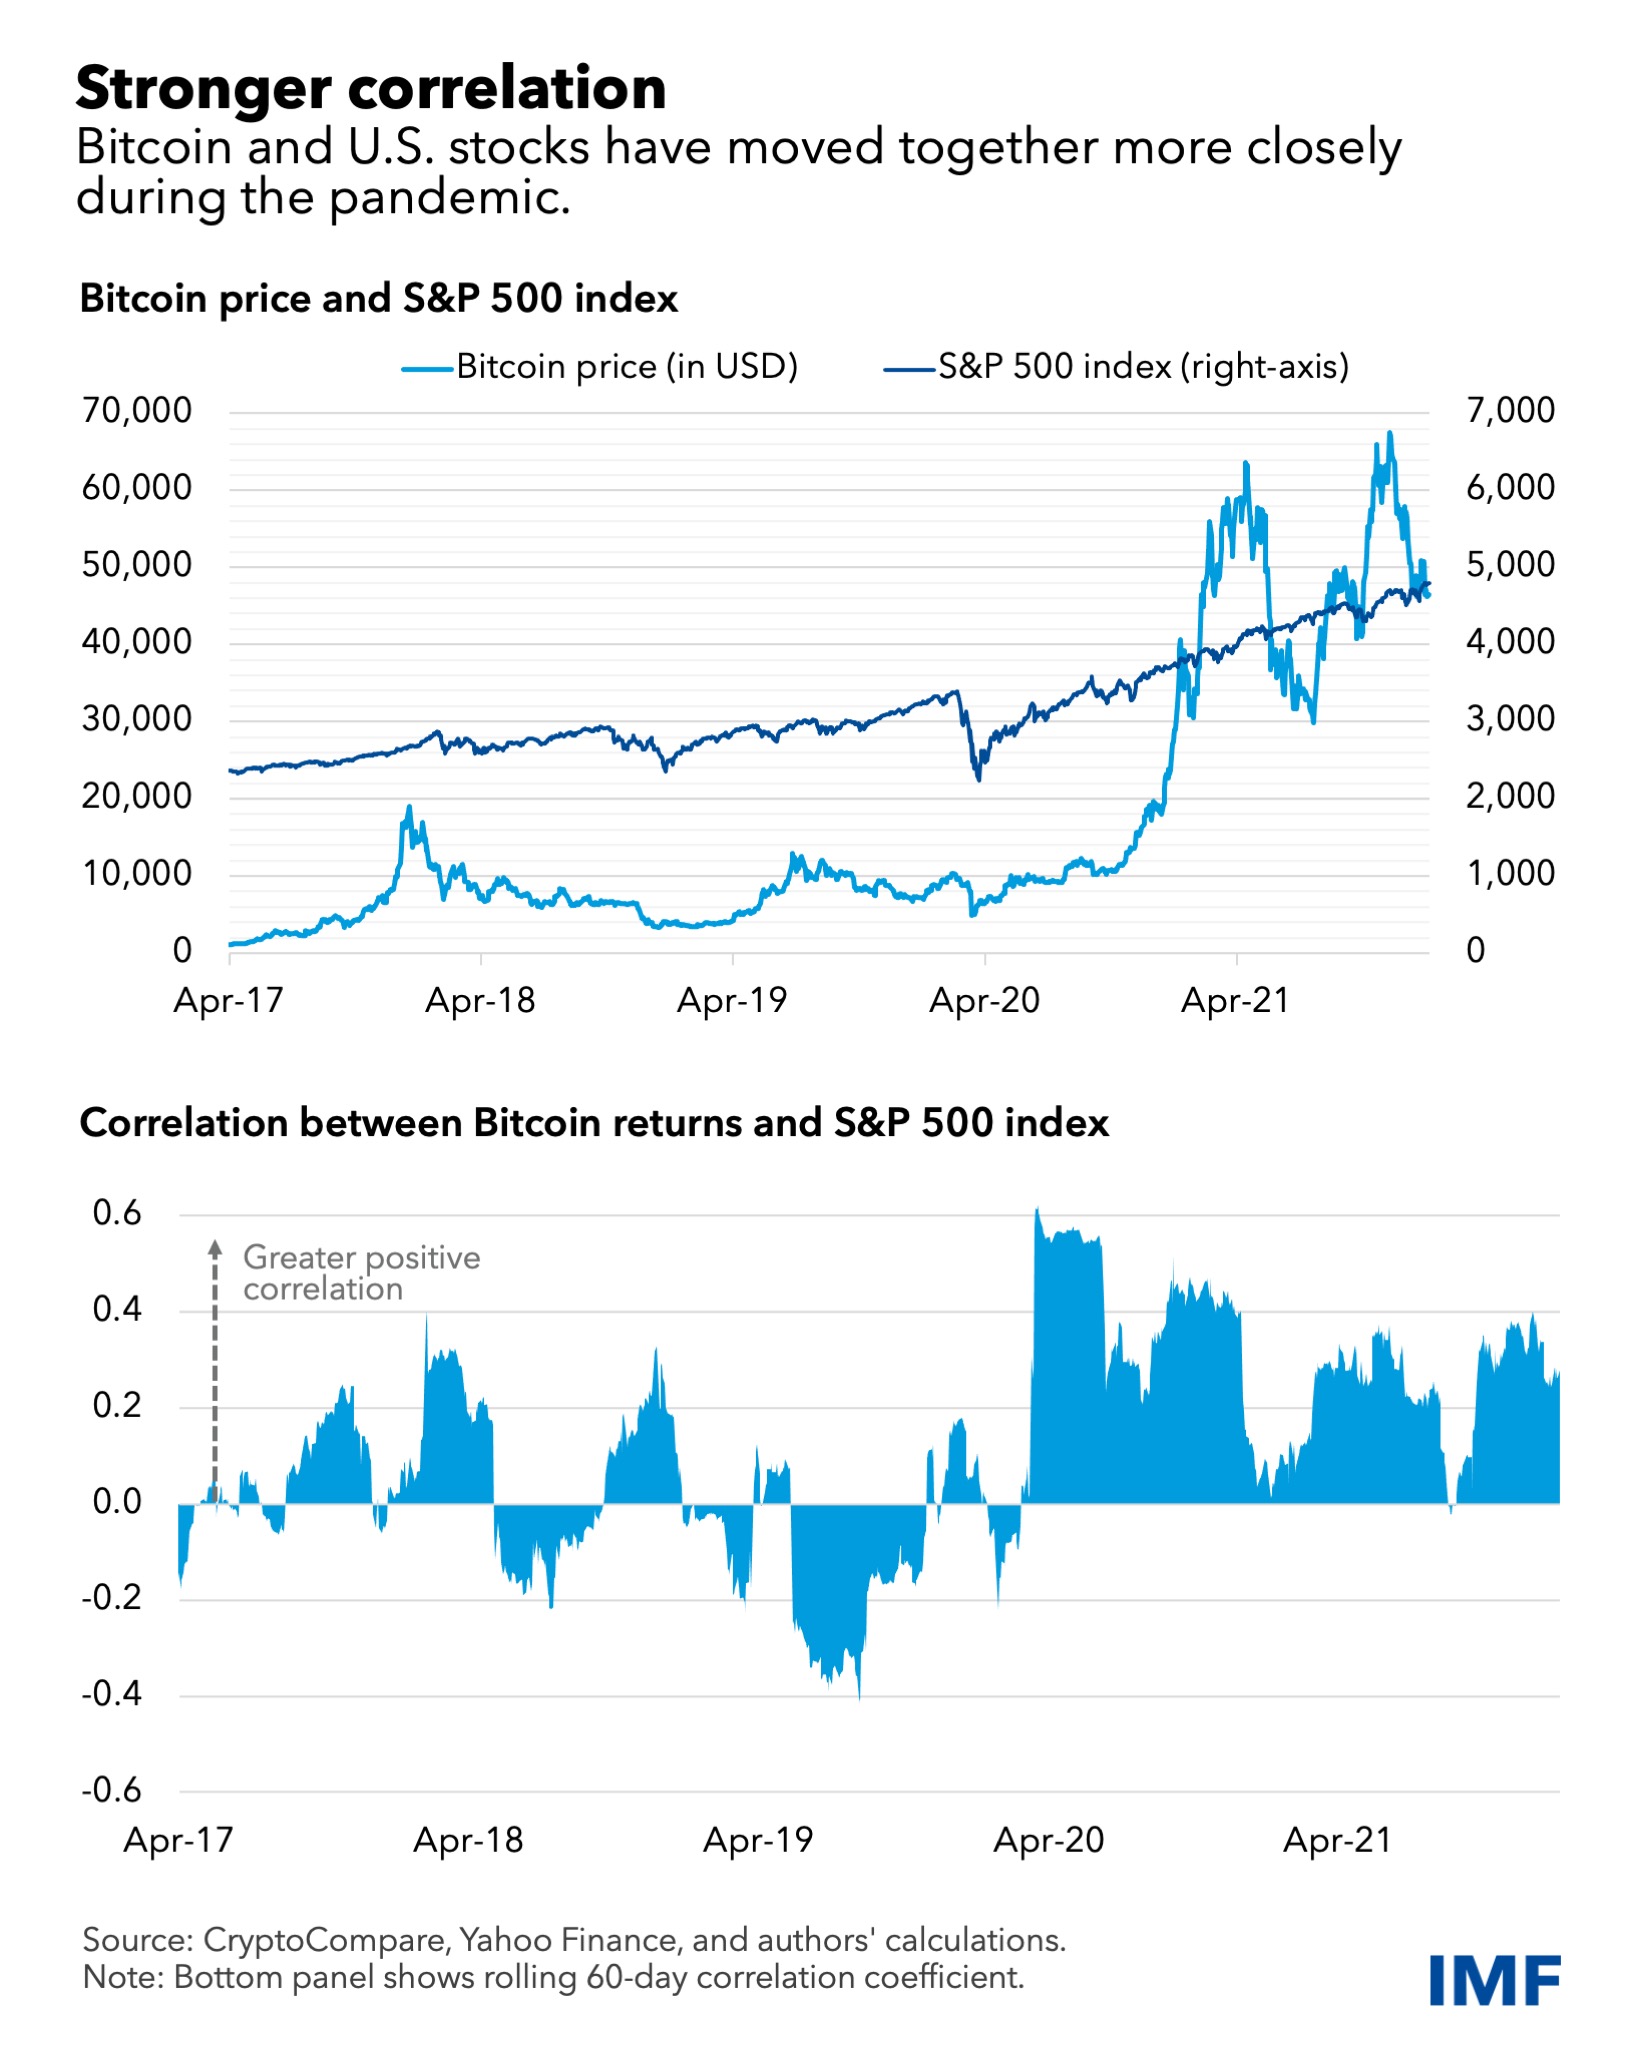 IMF Economists: Crypto Is Not on the Fringe Anymore, Correlation with Stocks Poses Risks